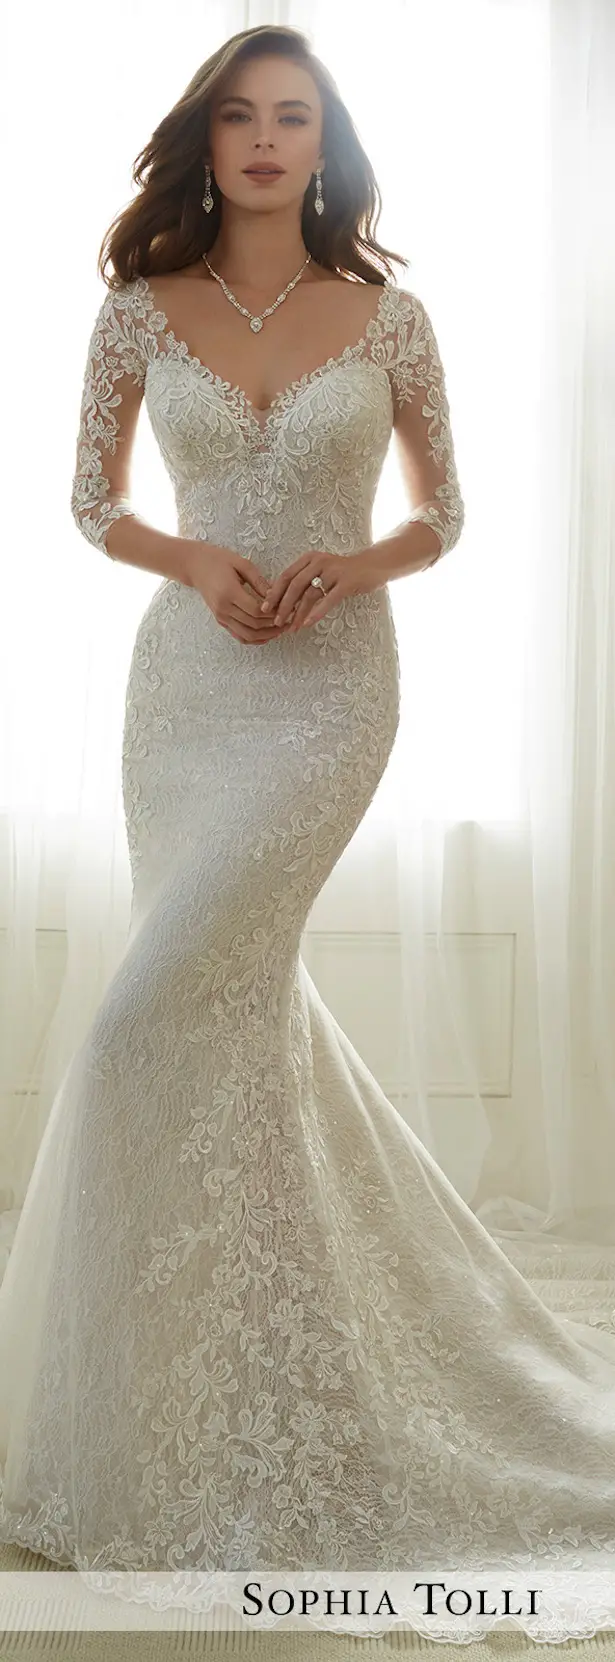 Lace Sleeves Wedding Dress - Sophia Tolli 2017